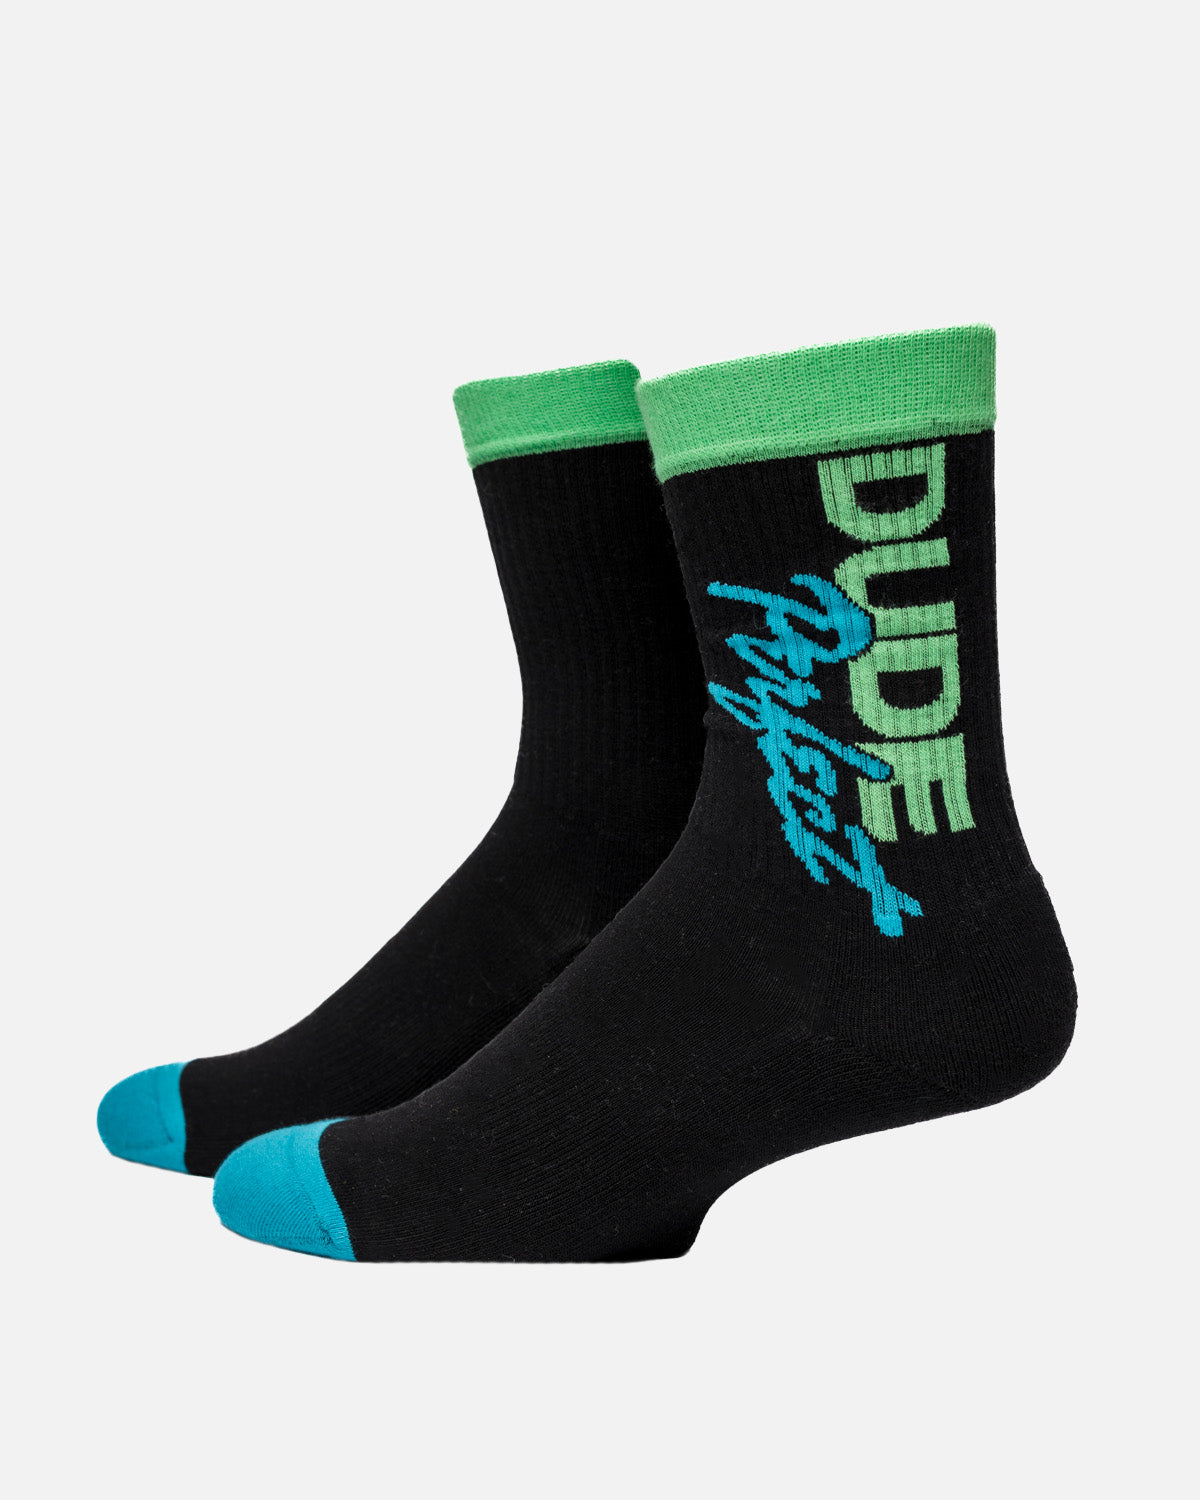 Pro Performer Socks 2-Pack (Blue Toes)